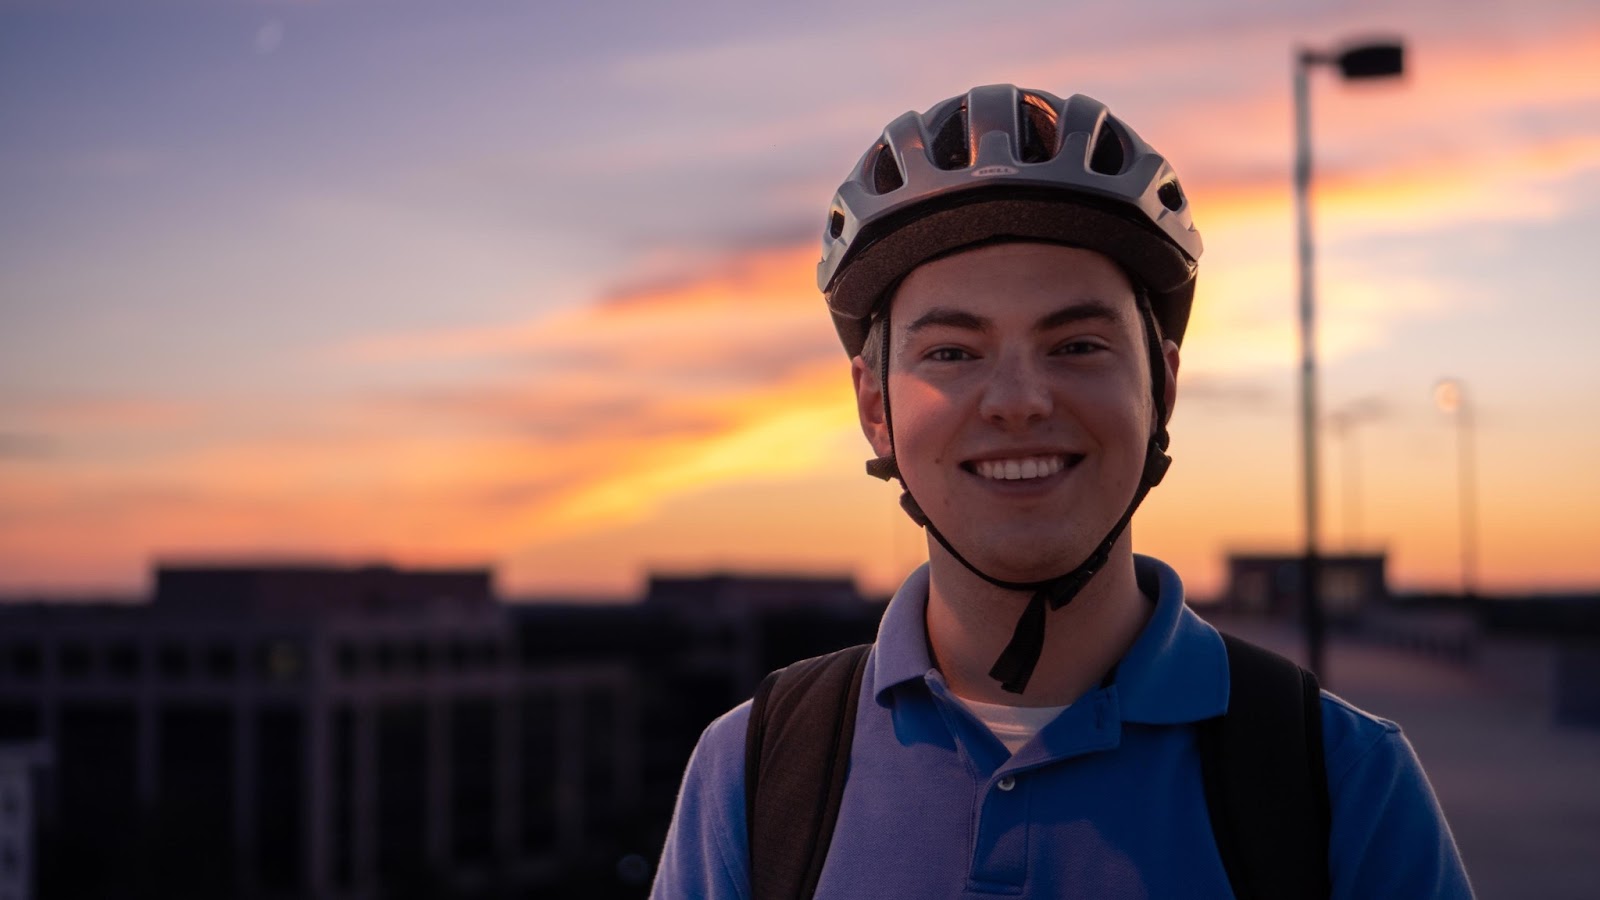 BellRinger rider smiling in a bike helmet at sunrise